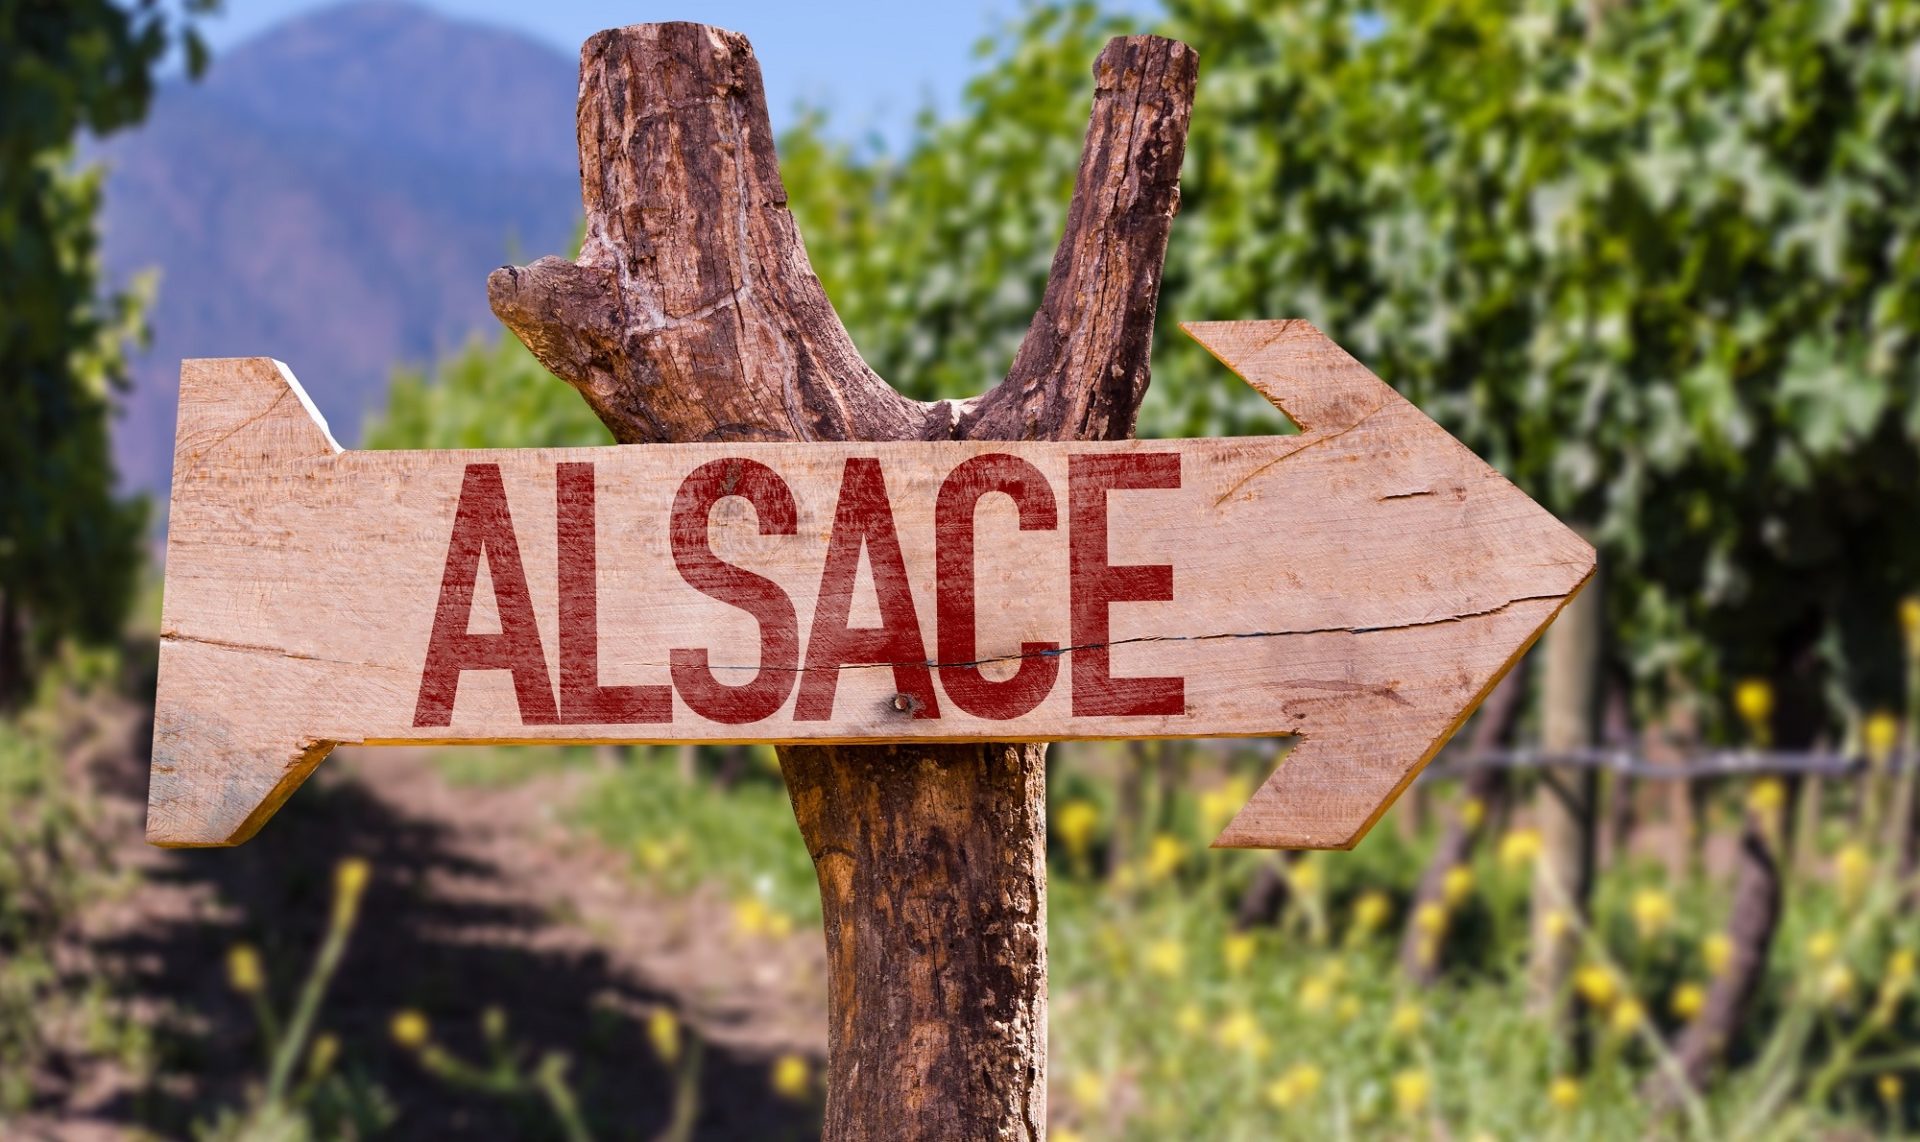 Agence Web Alsace